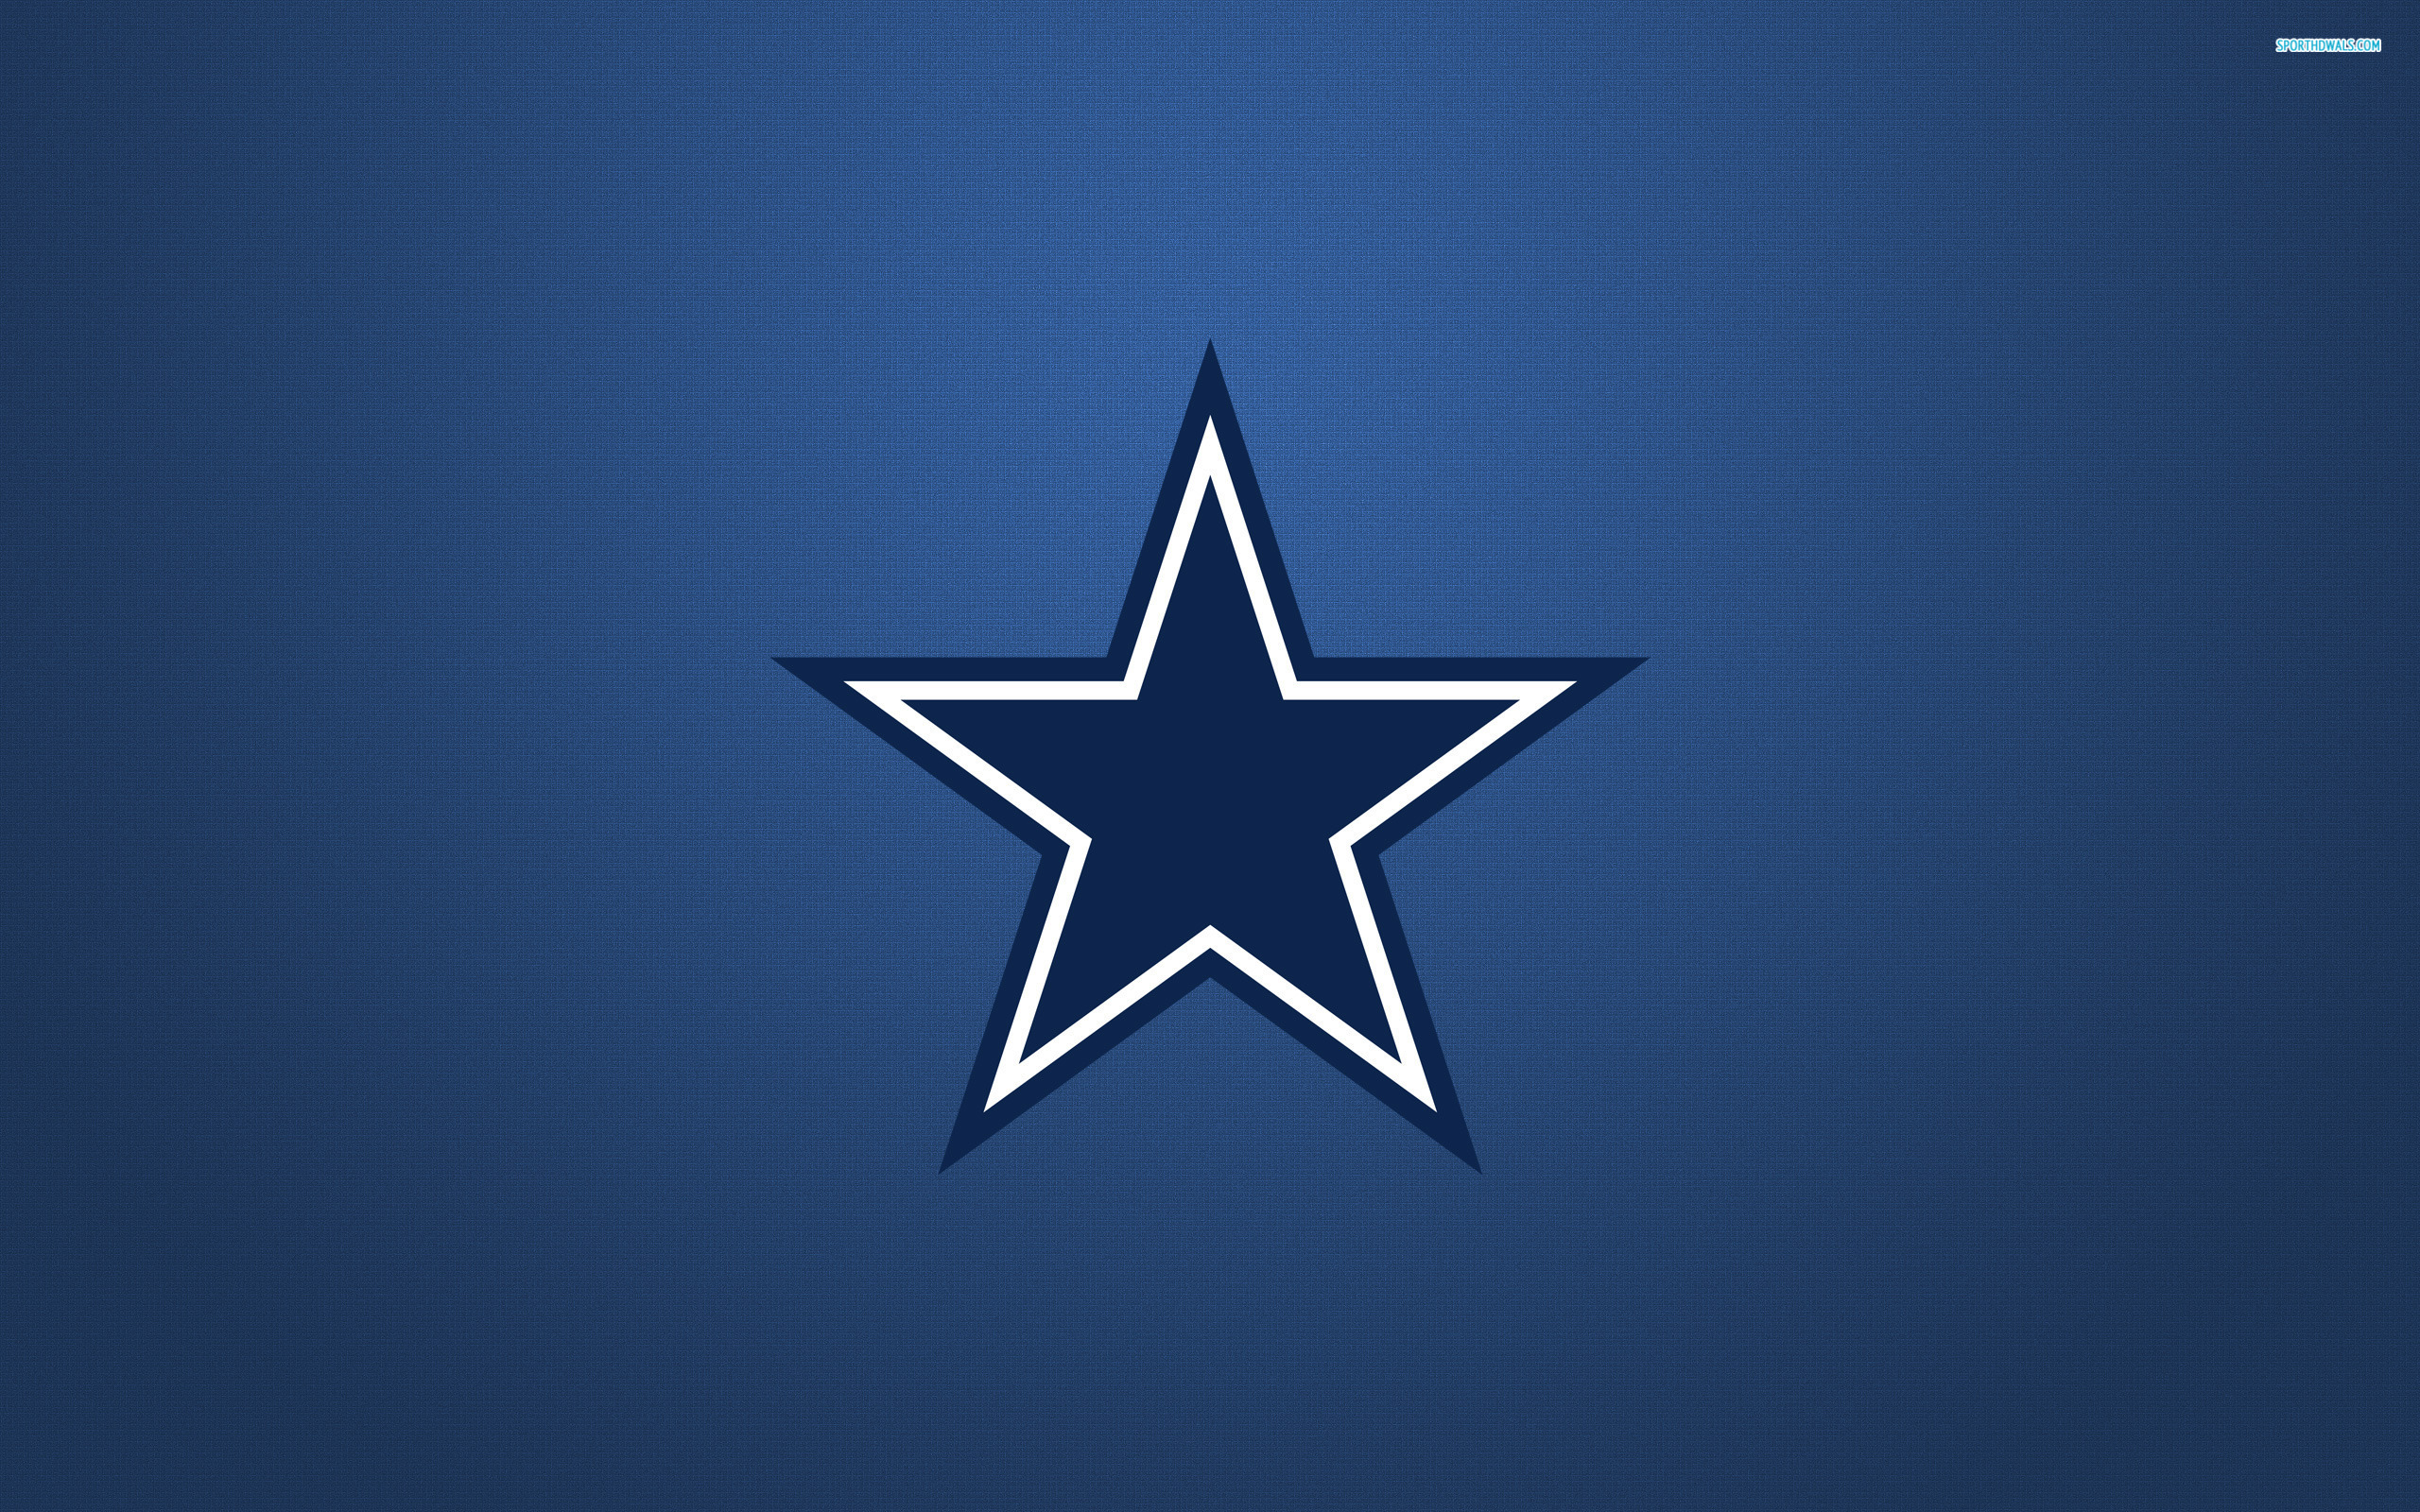 Dallas Cowboys Background Image Wallpaper